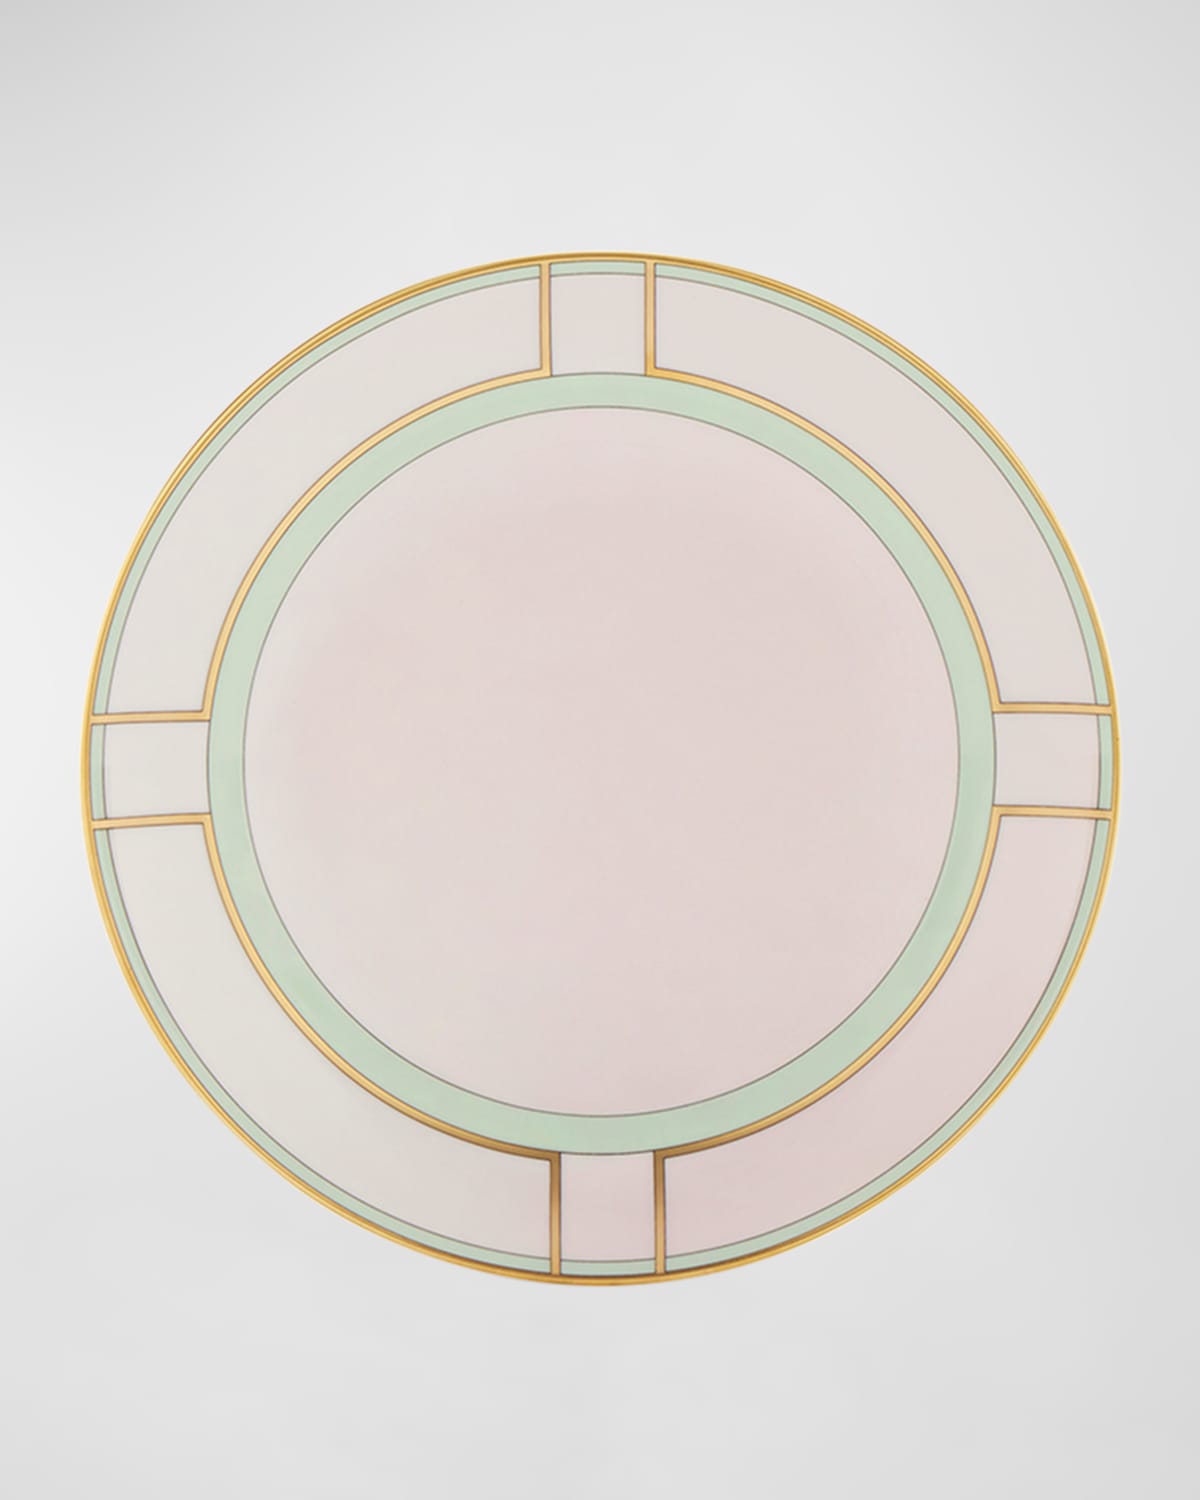 Ginori 1735 Diva Dessert Plate, Rosa In Pink